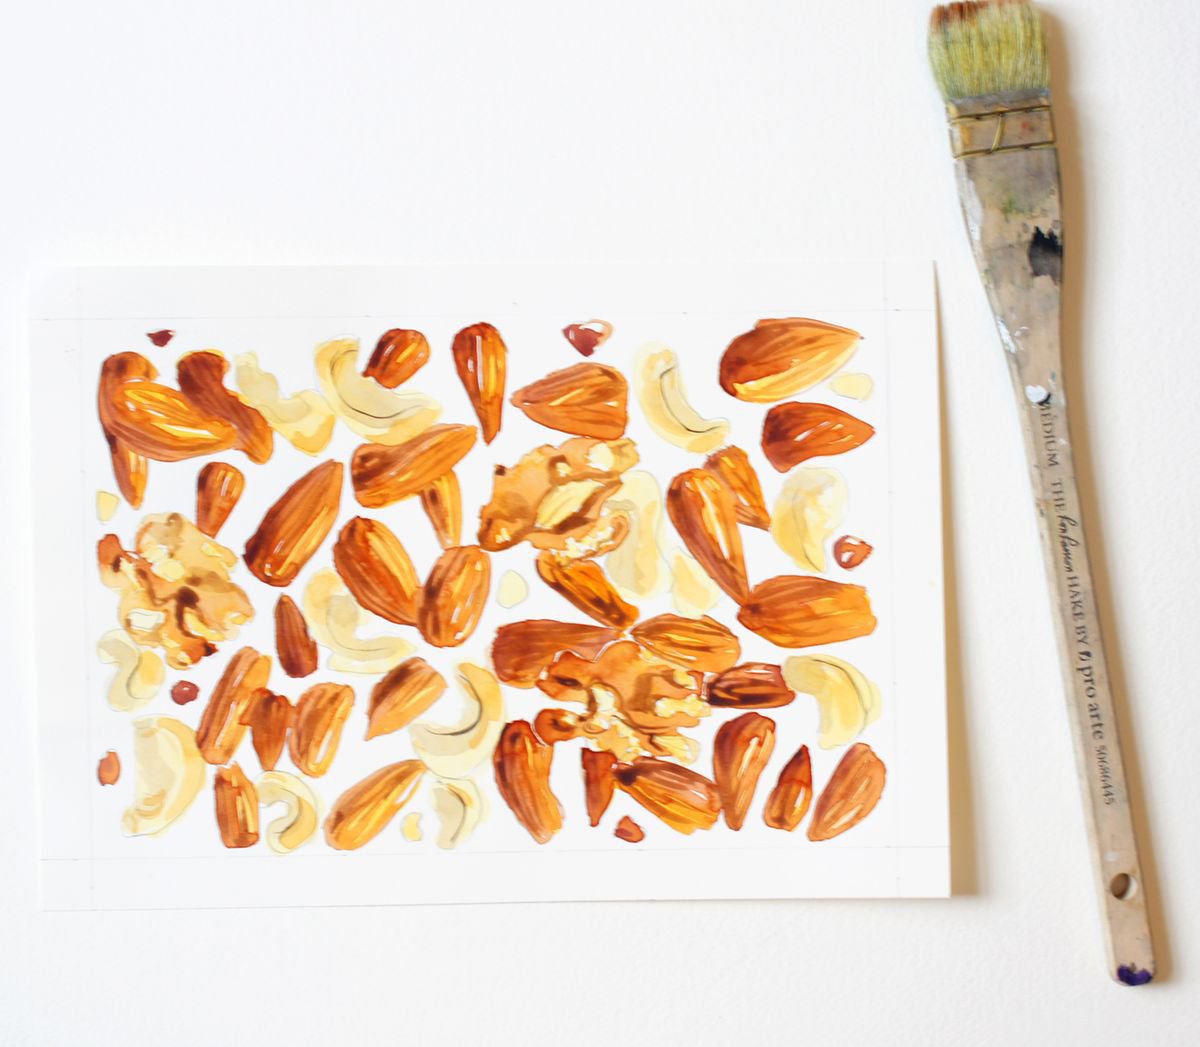 Mixed Nuts by Hannah Clark